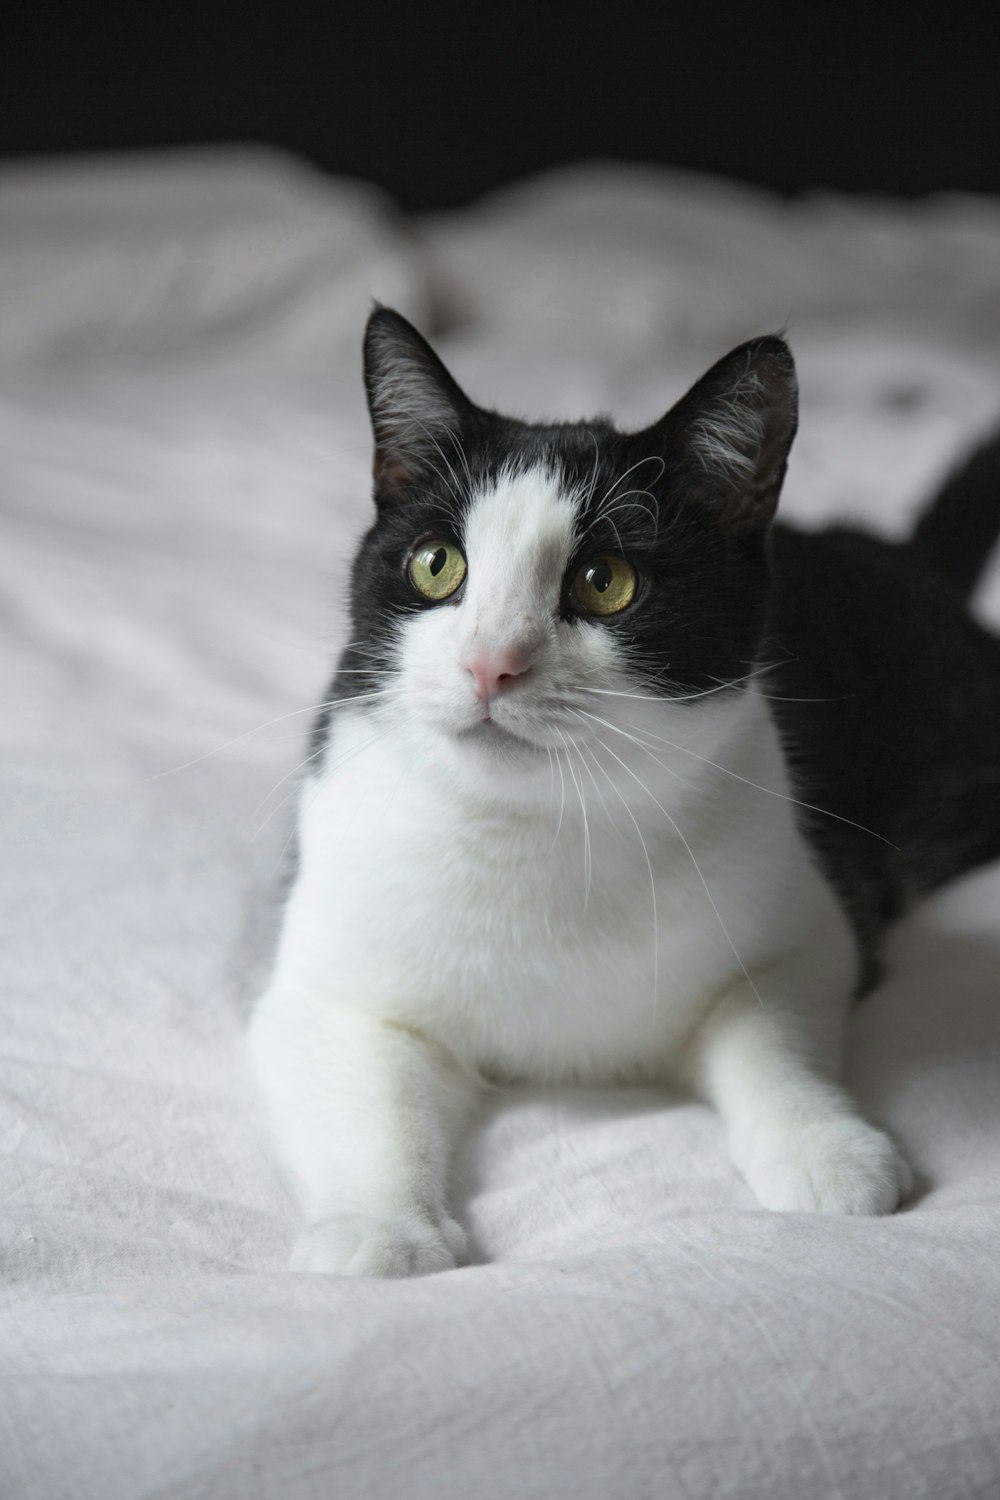 Short Fur Black And White Cat On White Mattress Photo Free Cat Image On Unsplash